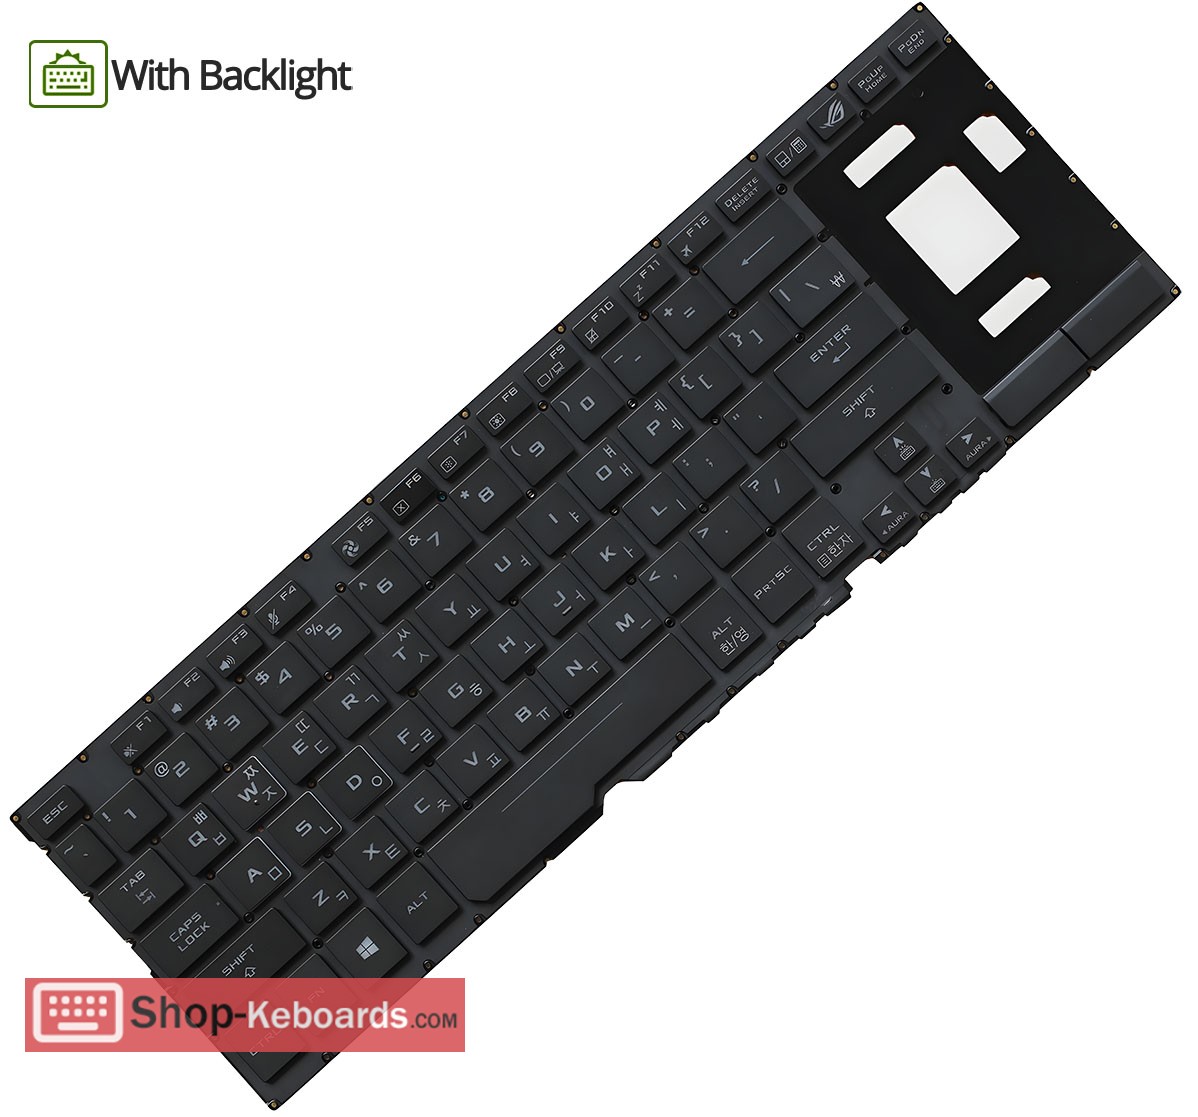 Asus 0KNR0-661DJP00 Keyboard replacement